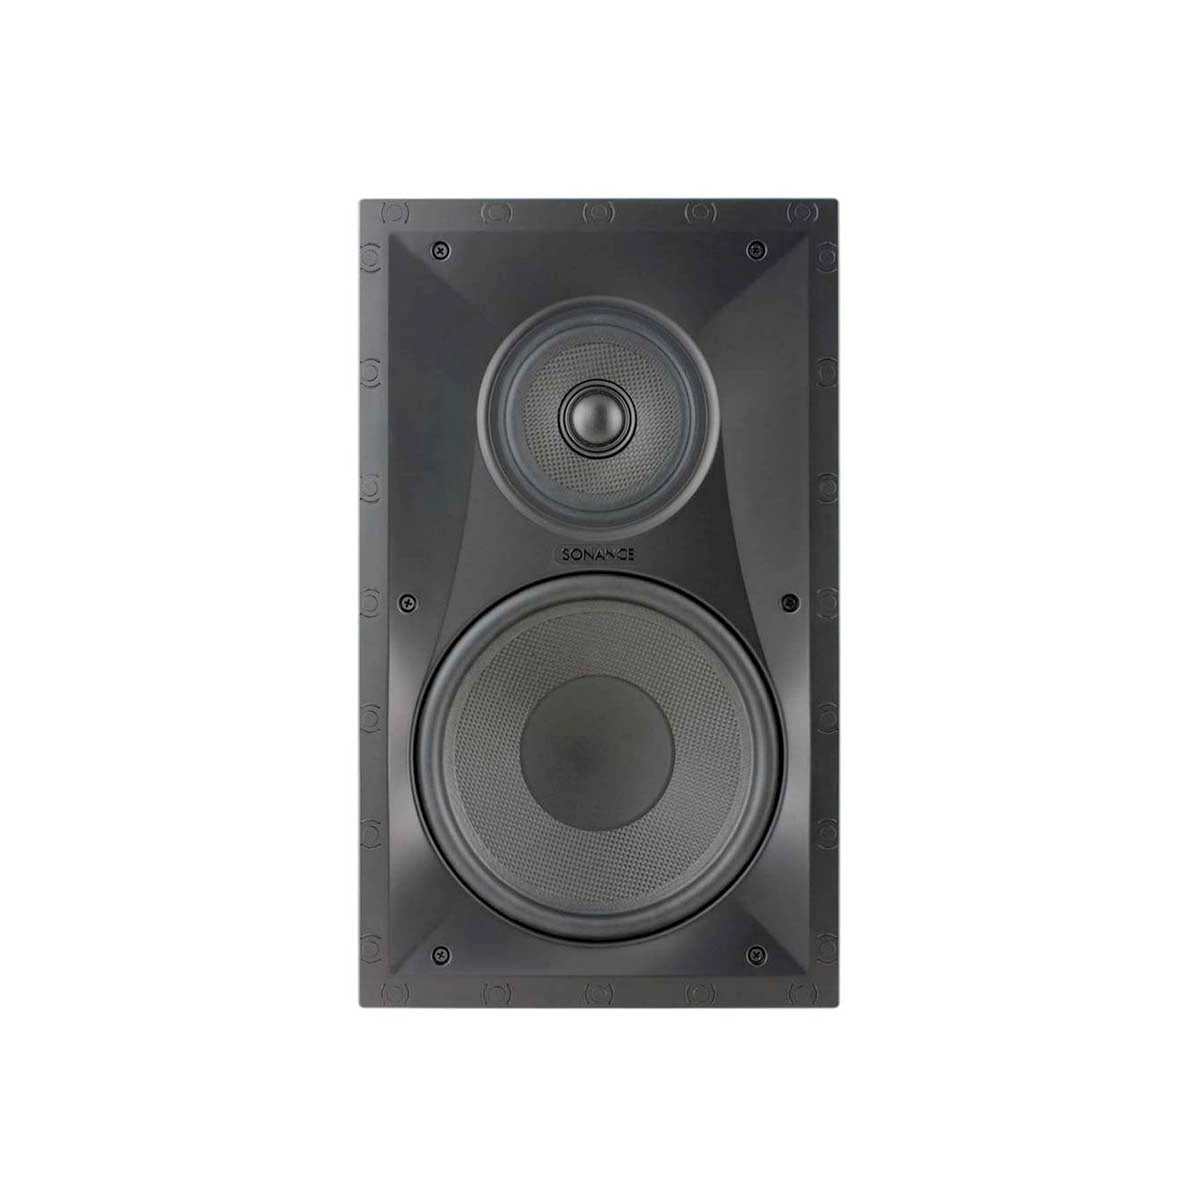 Sonance VP42 4.5" Rectangular Speakers pair